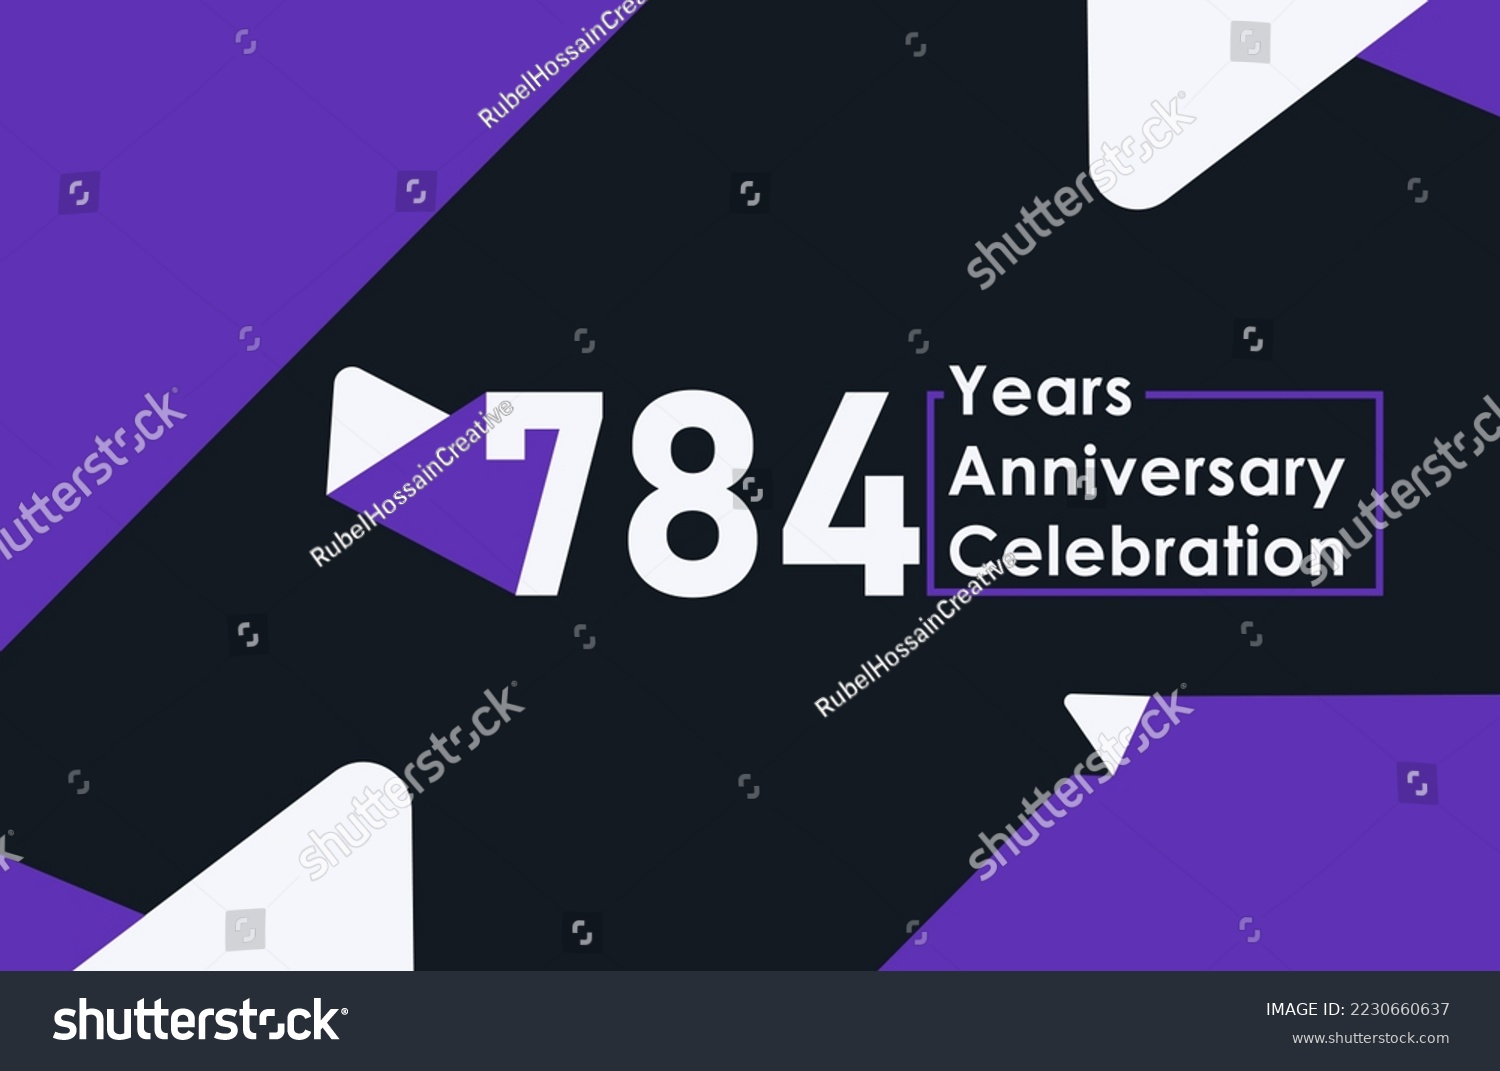 SVG of 784 years anniversary celebration modern banner template design svg